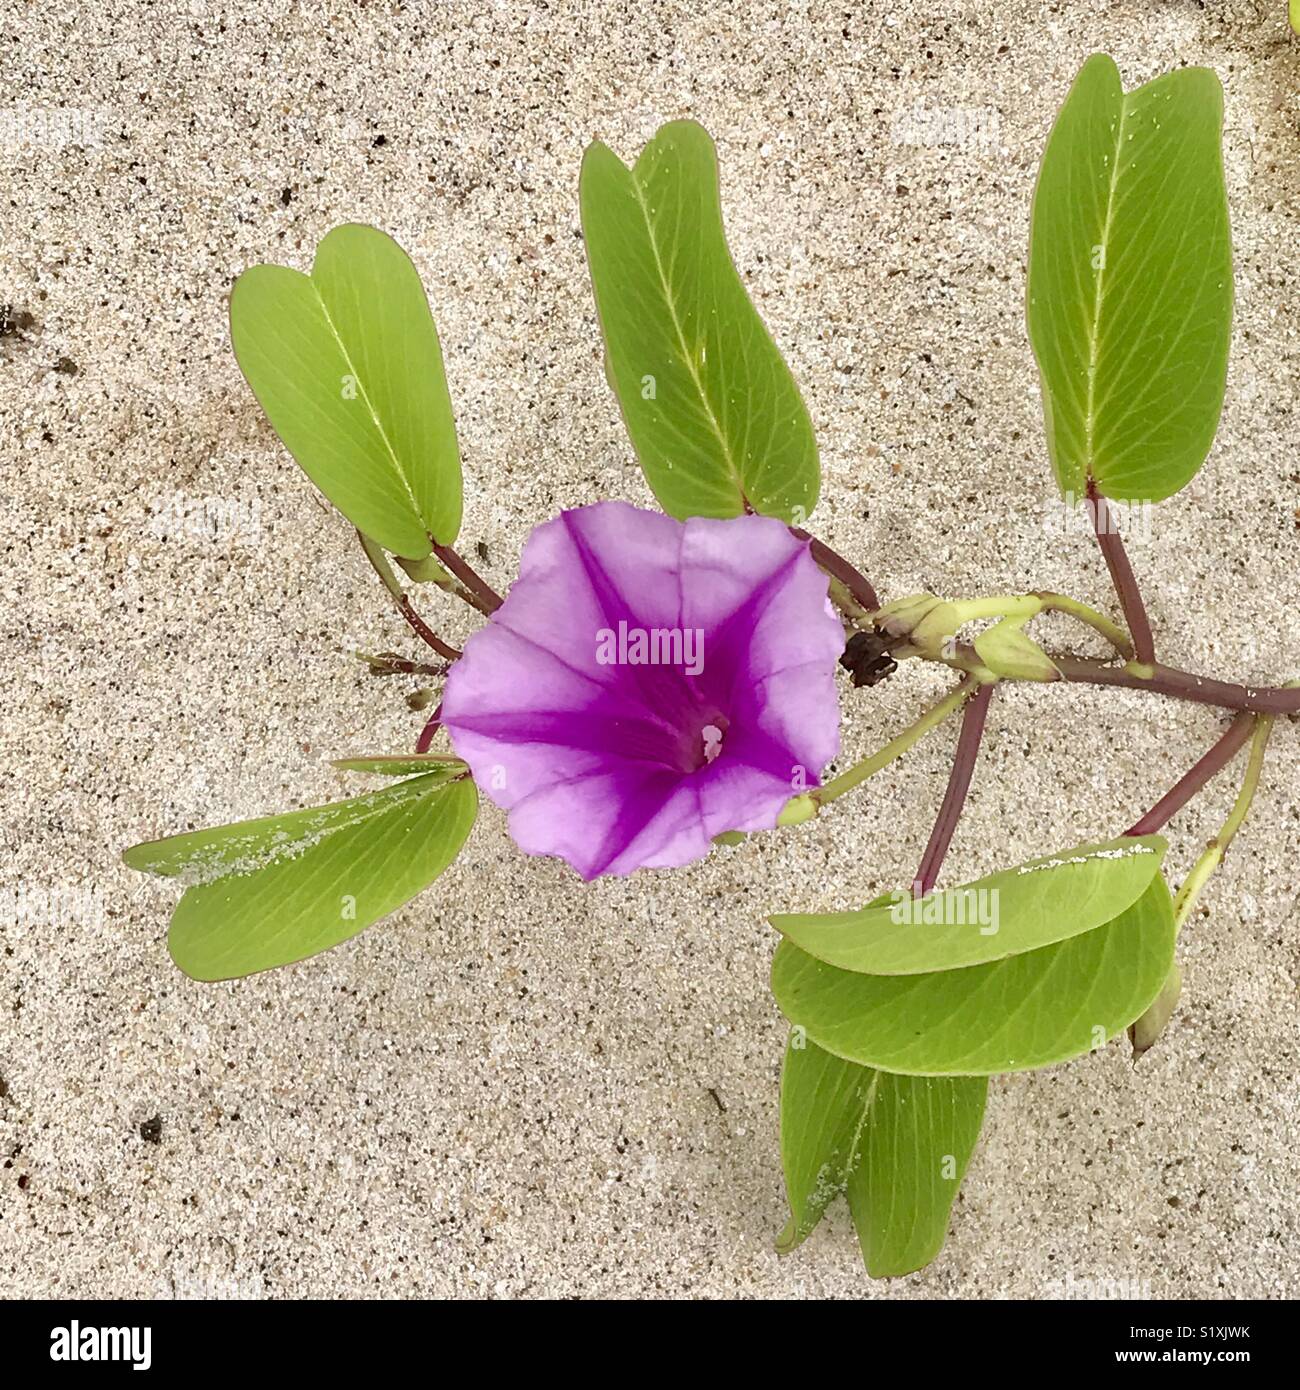 Goat’s Foot Ipomoea, morning glory vine growing on beach sand, Big Island, Hawaii Stock Photo